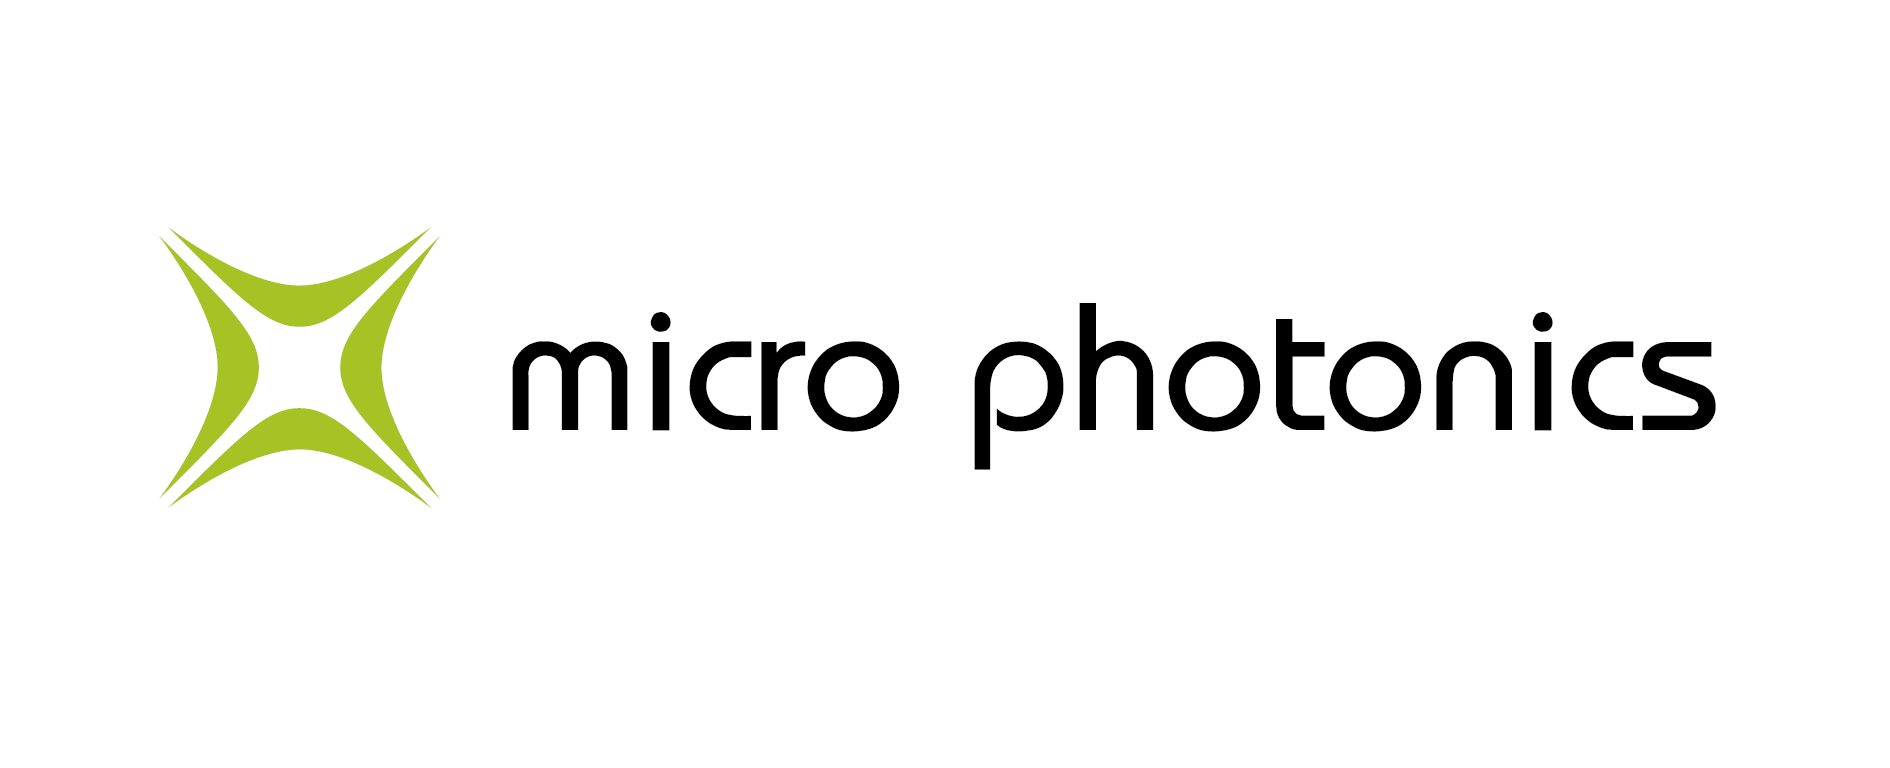 micro photonics Logo